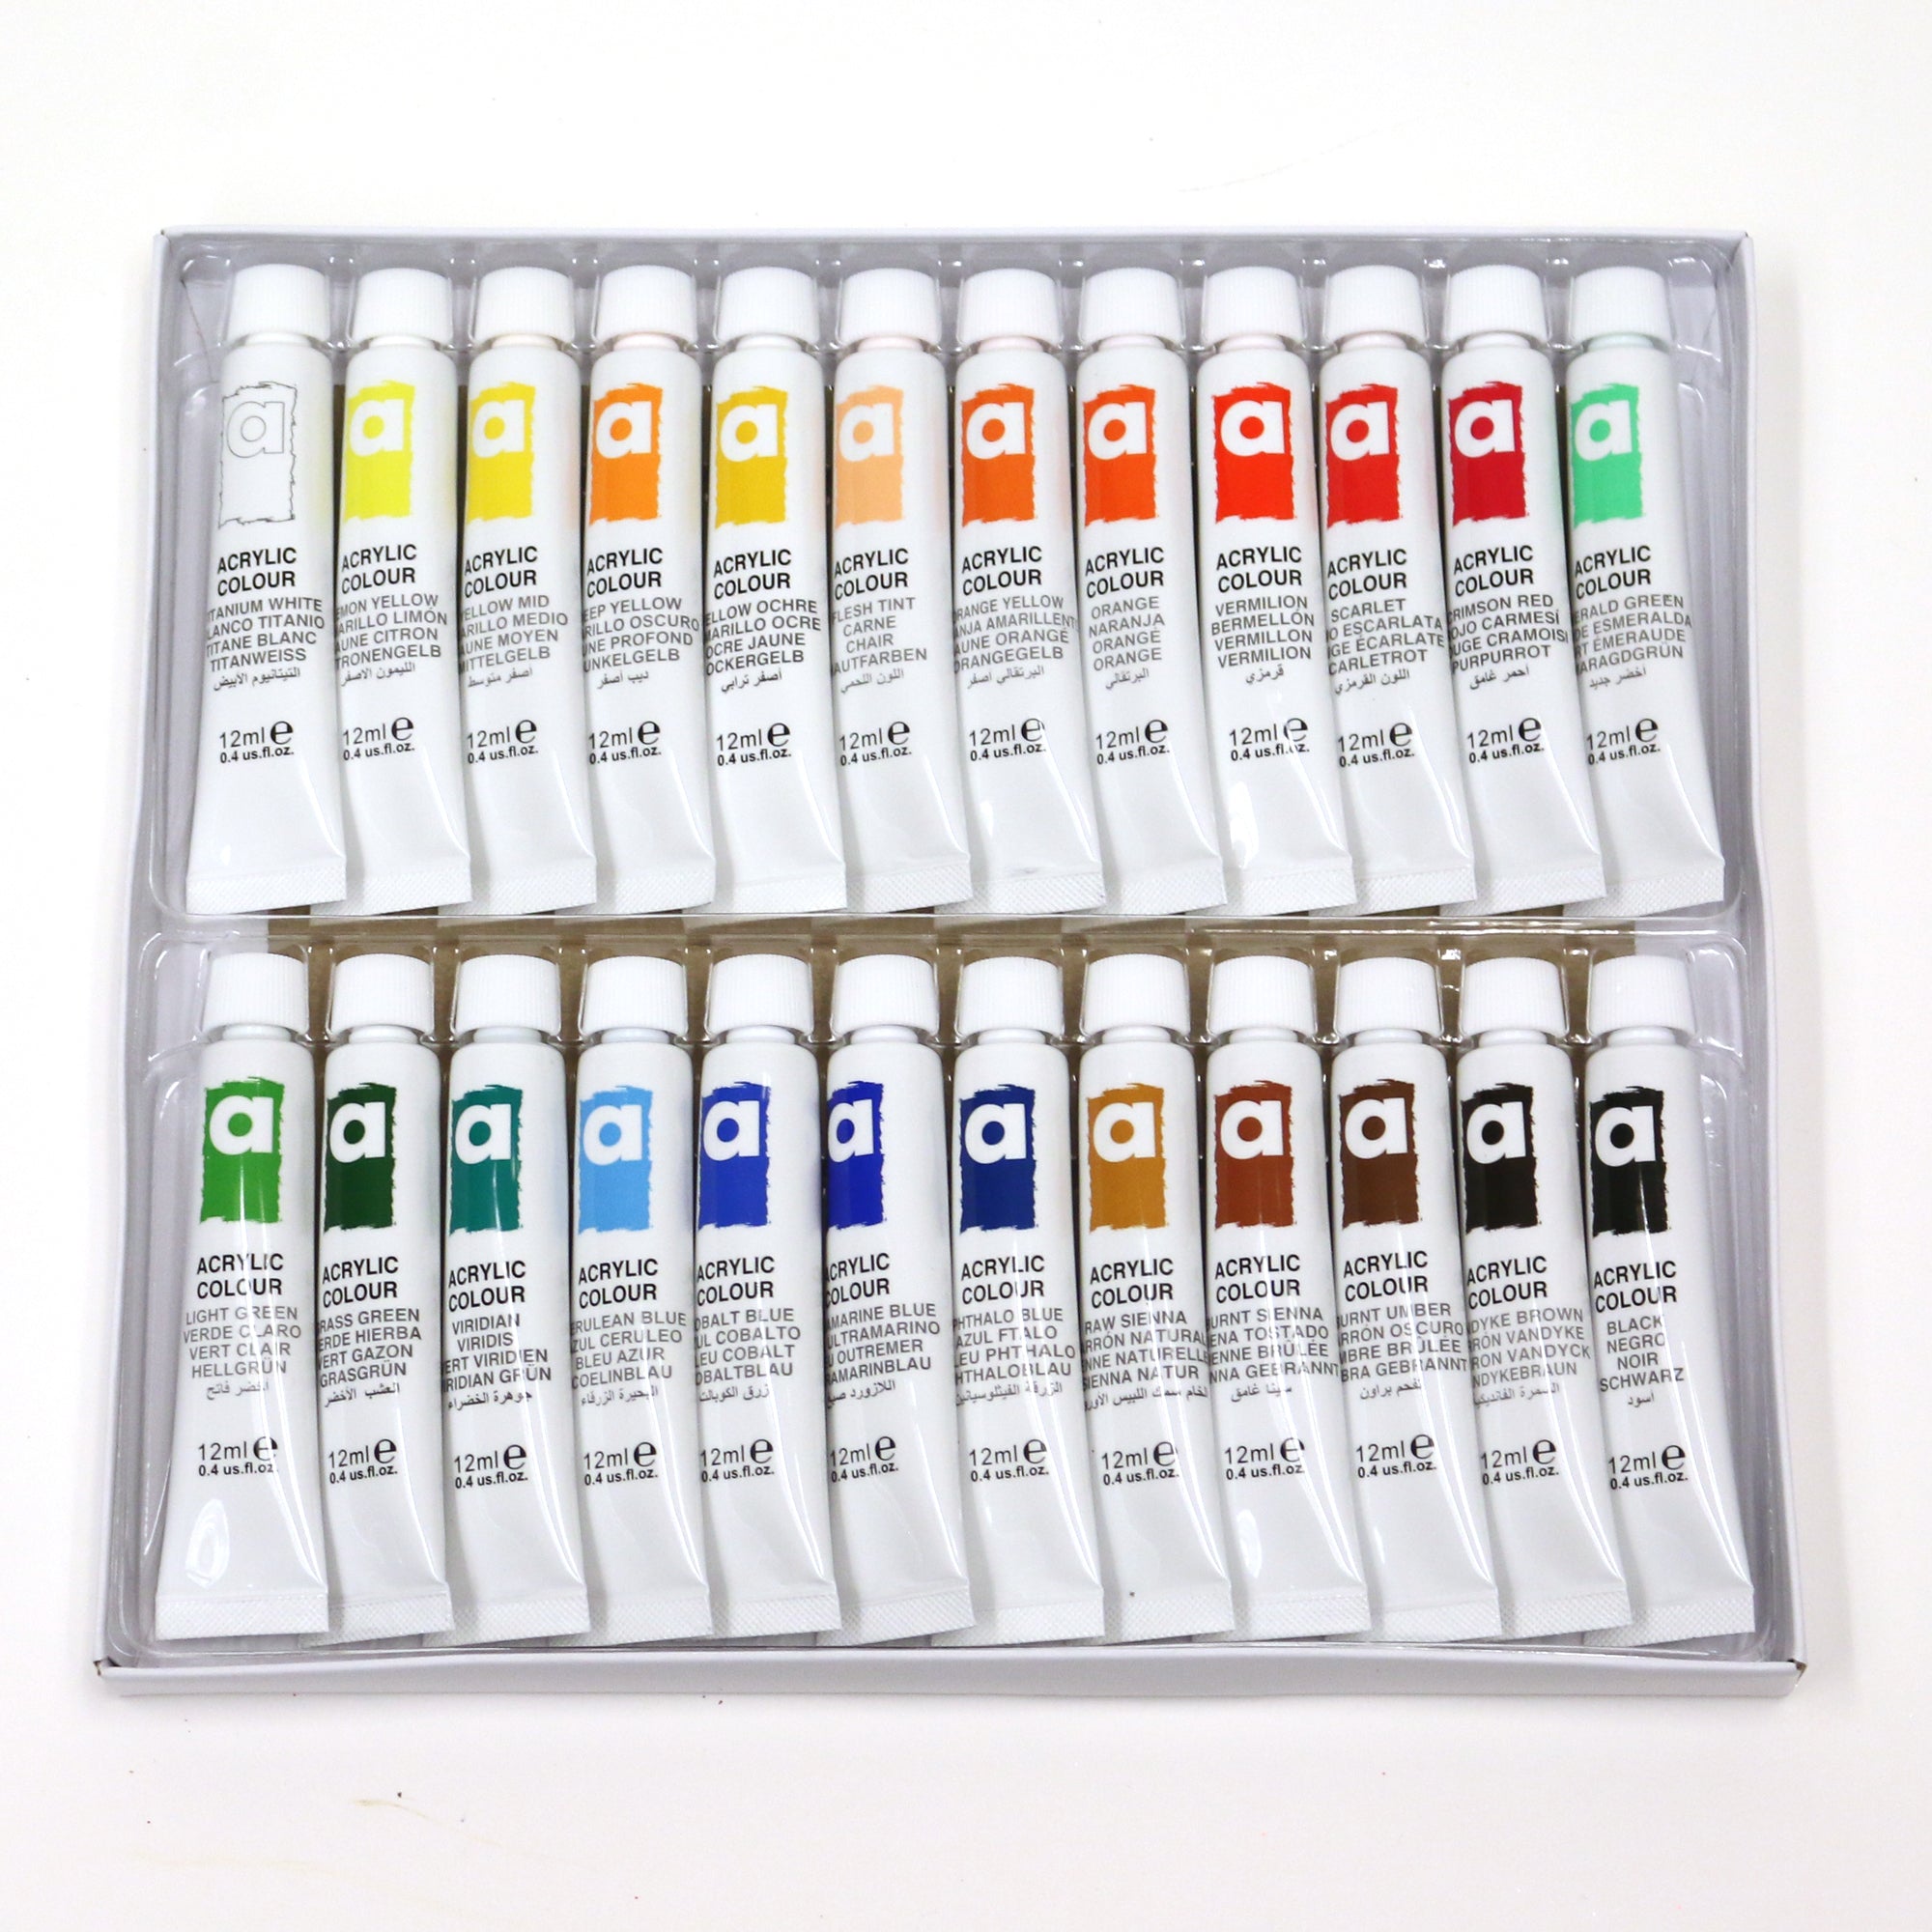 Watercolors Multicolor Watercolor Paint Set, Packaging Type: Plastic Box,  Packaging Size: 12 Pcs